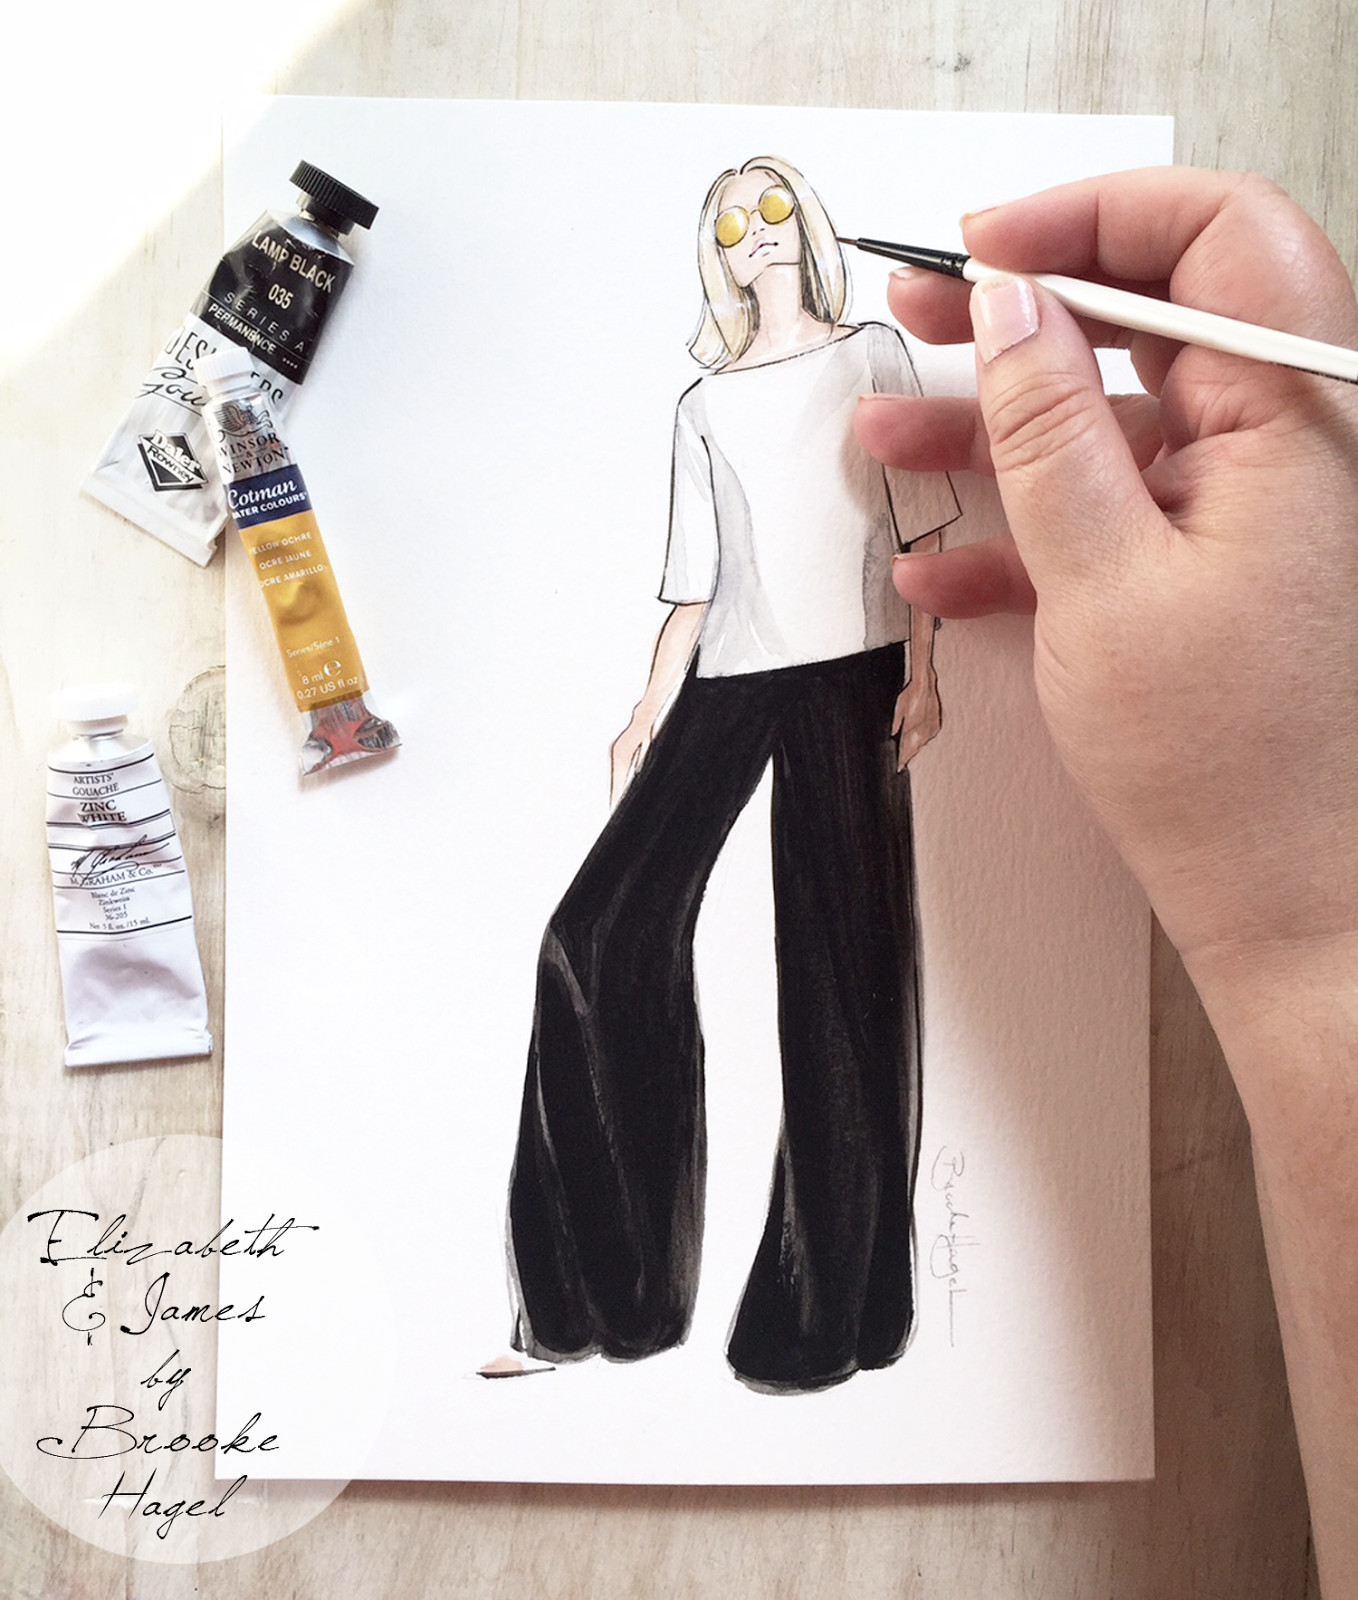 Fabulous Doodles Fashion Illustration blog by Brooke Hagel: Donna